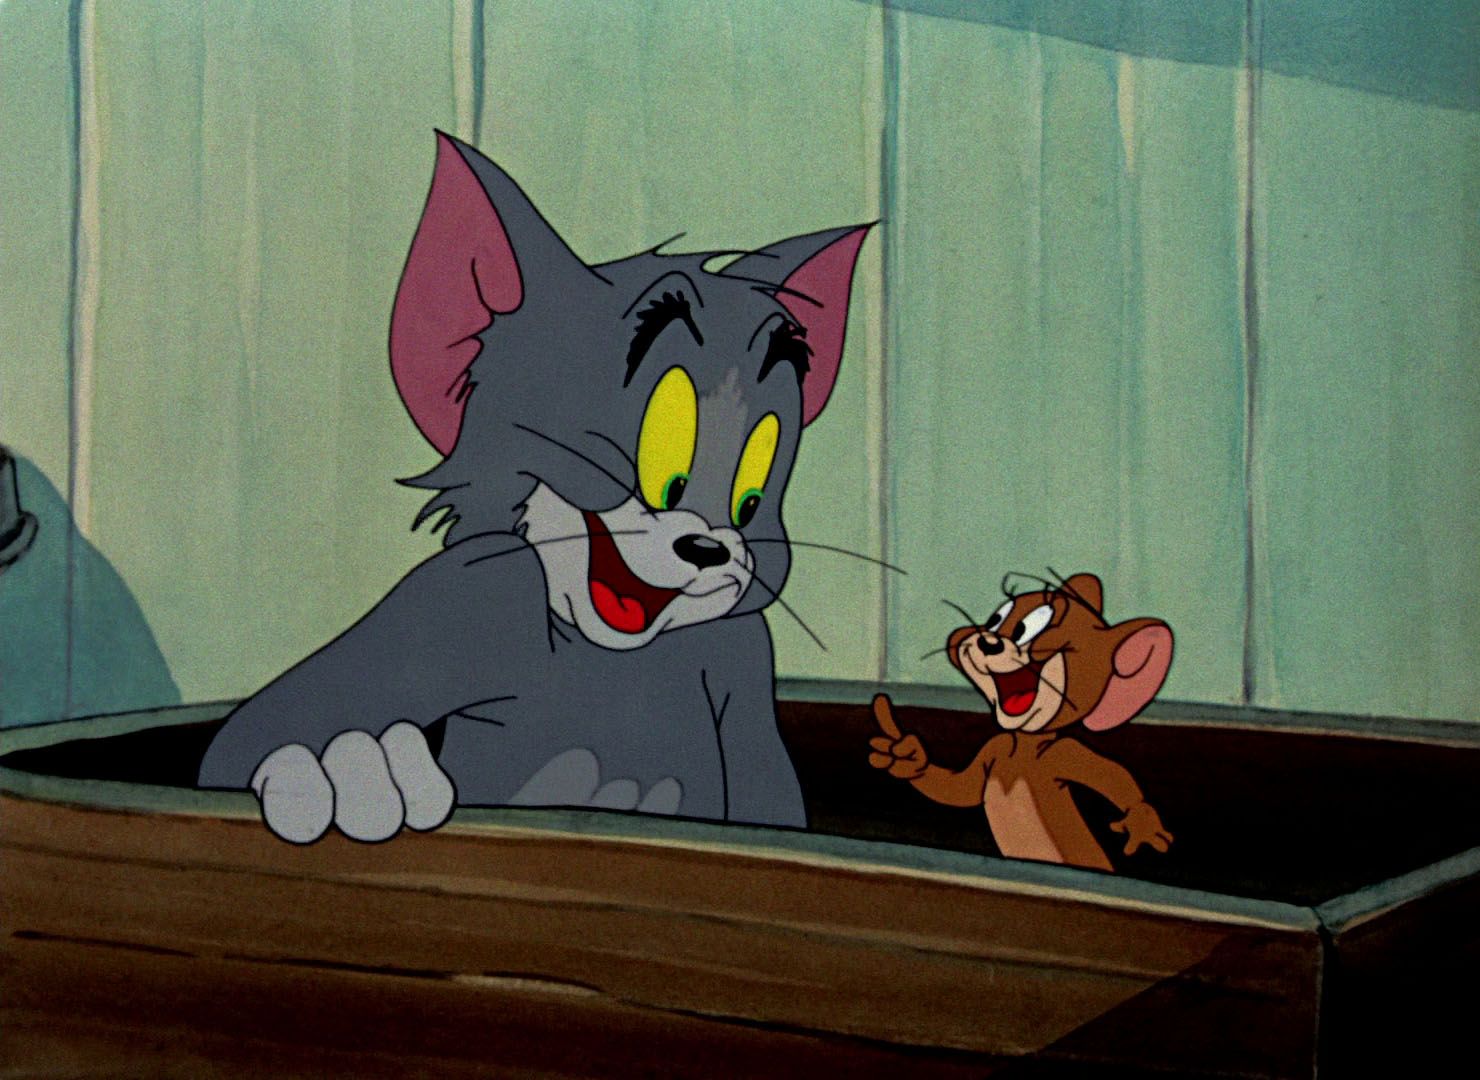 Jerry том и джерри. Том и Джерри 1960. Том и Джерри (Tom and Jerry) 1940. Том и Джерри 1996.